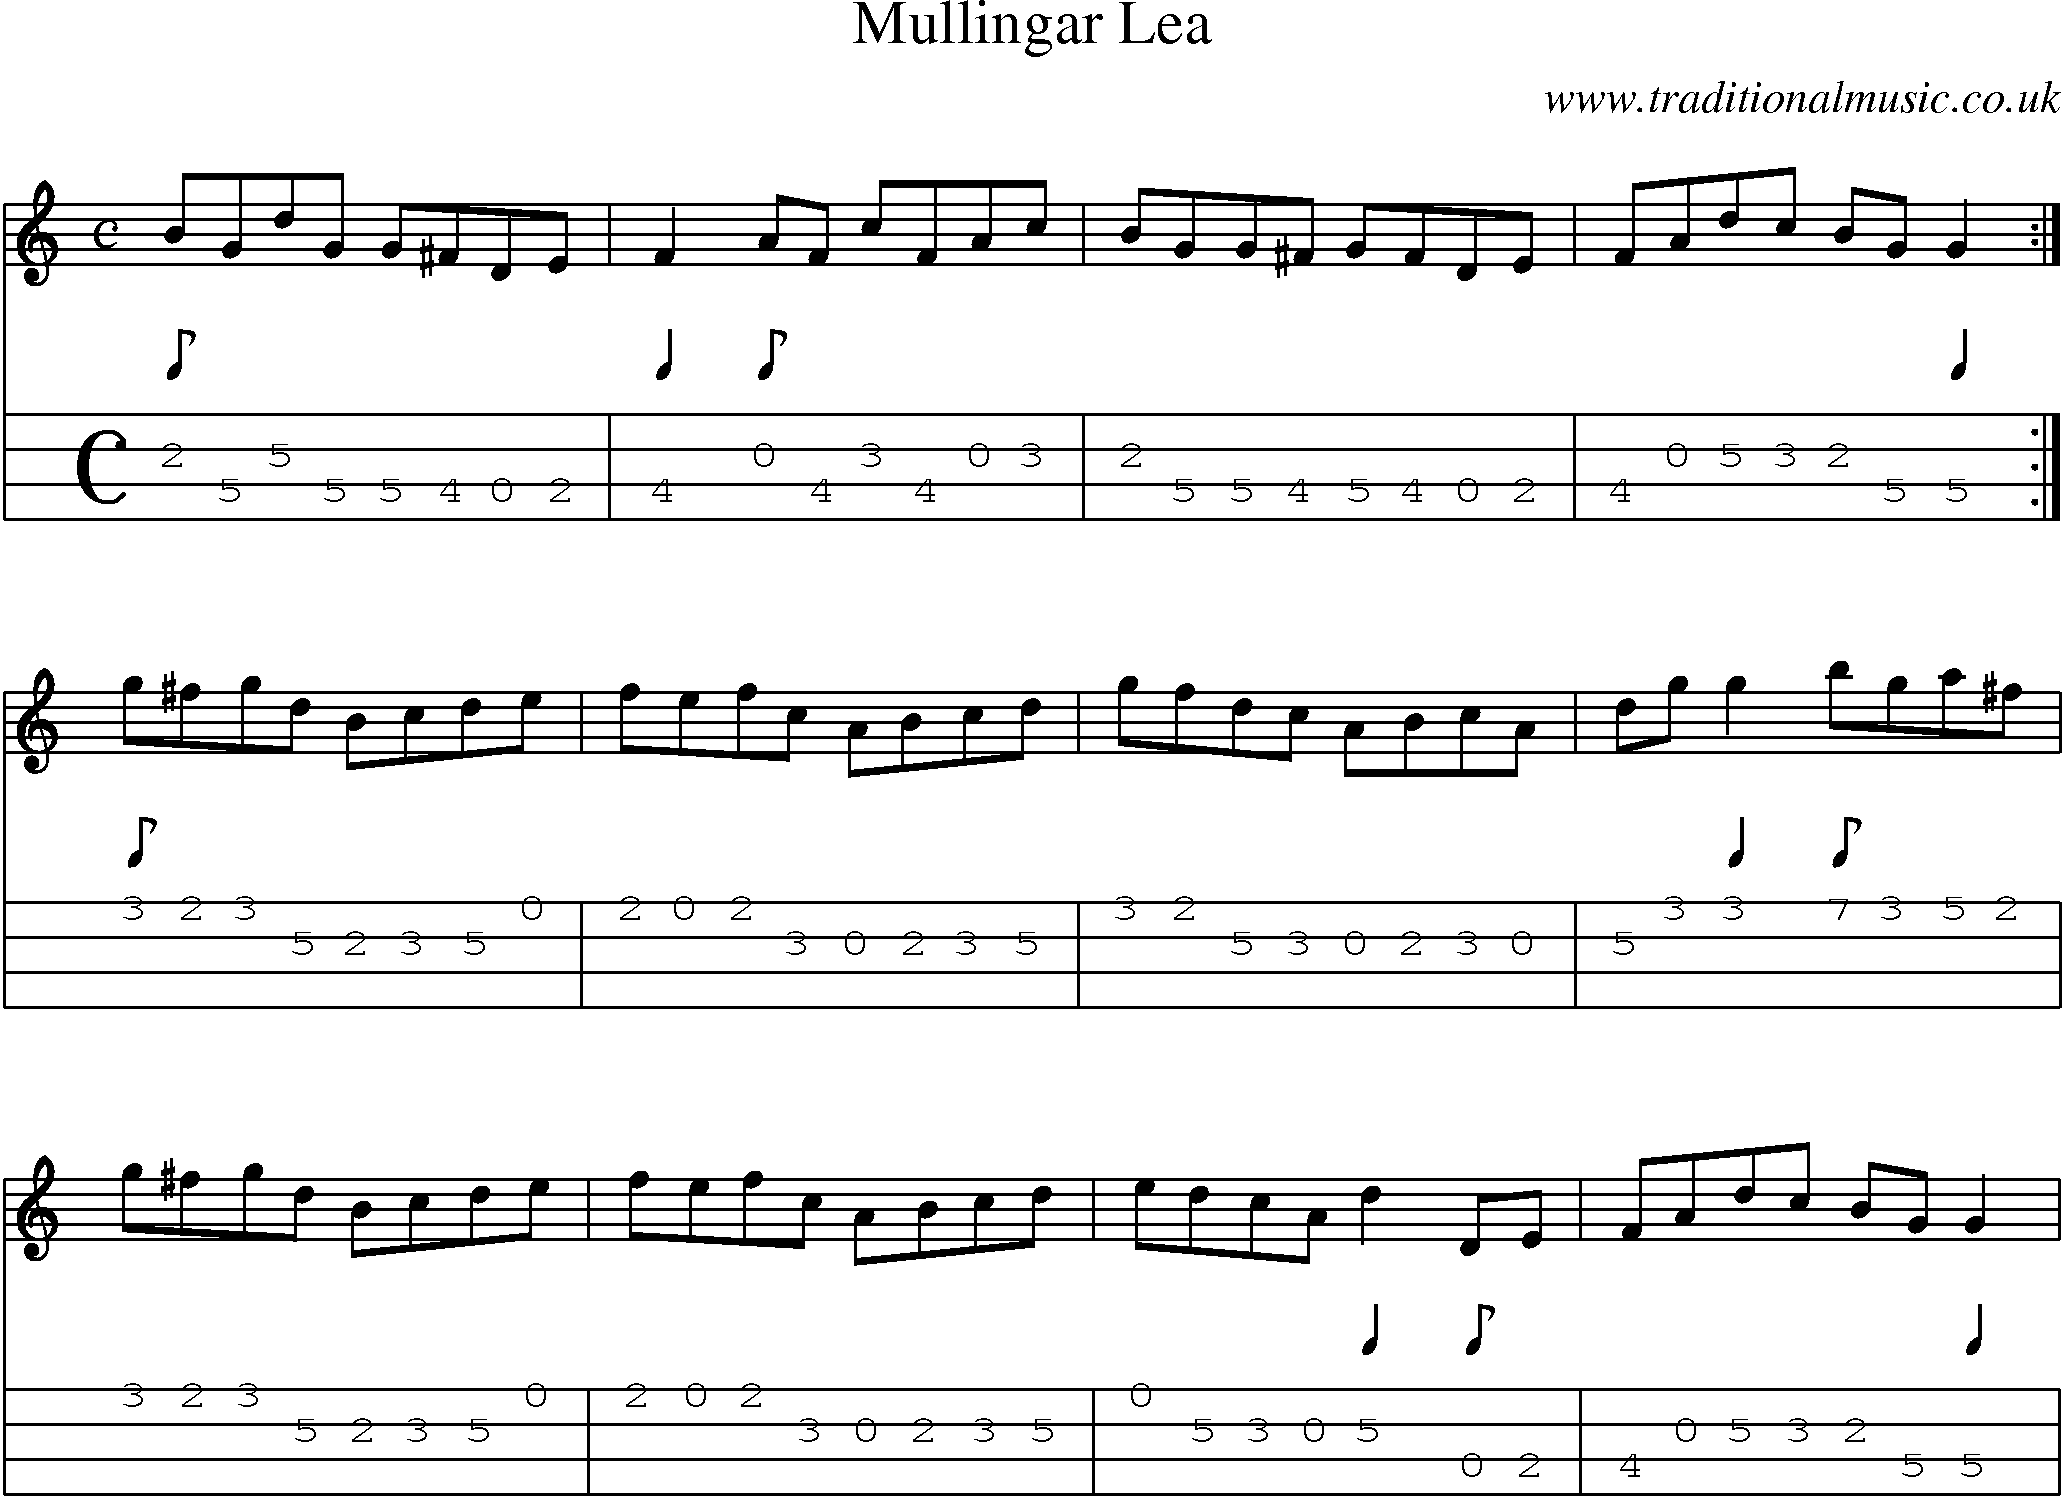 Music Score and Mandolin Tabs for Mullingar Lea